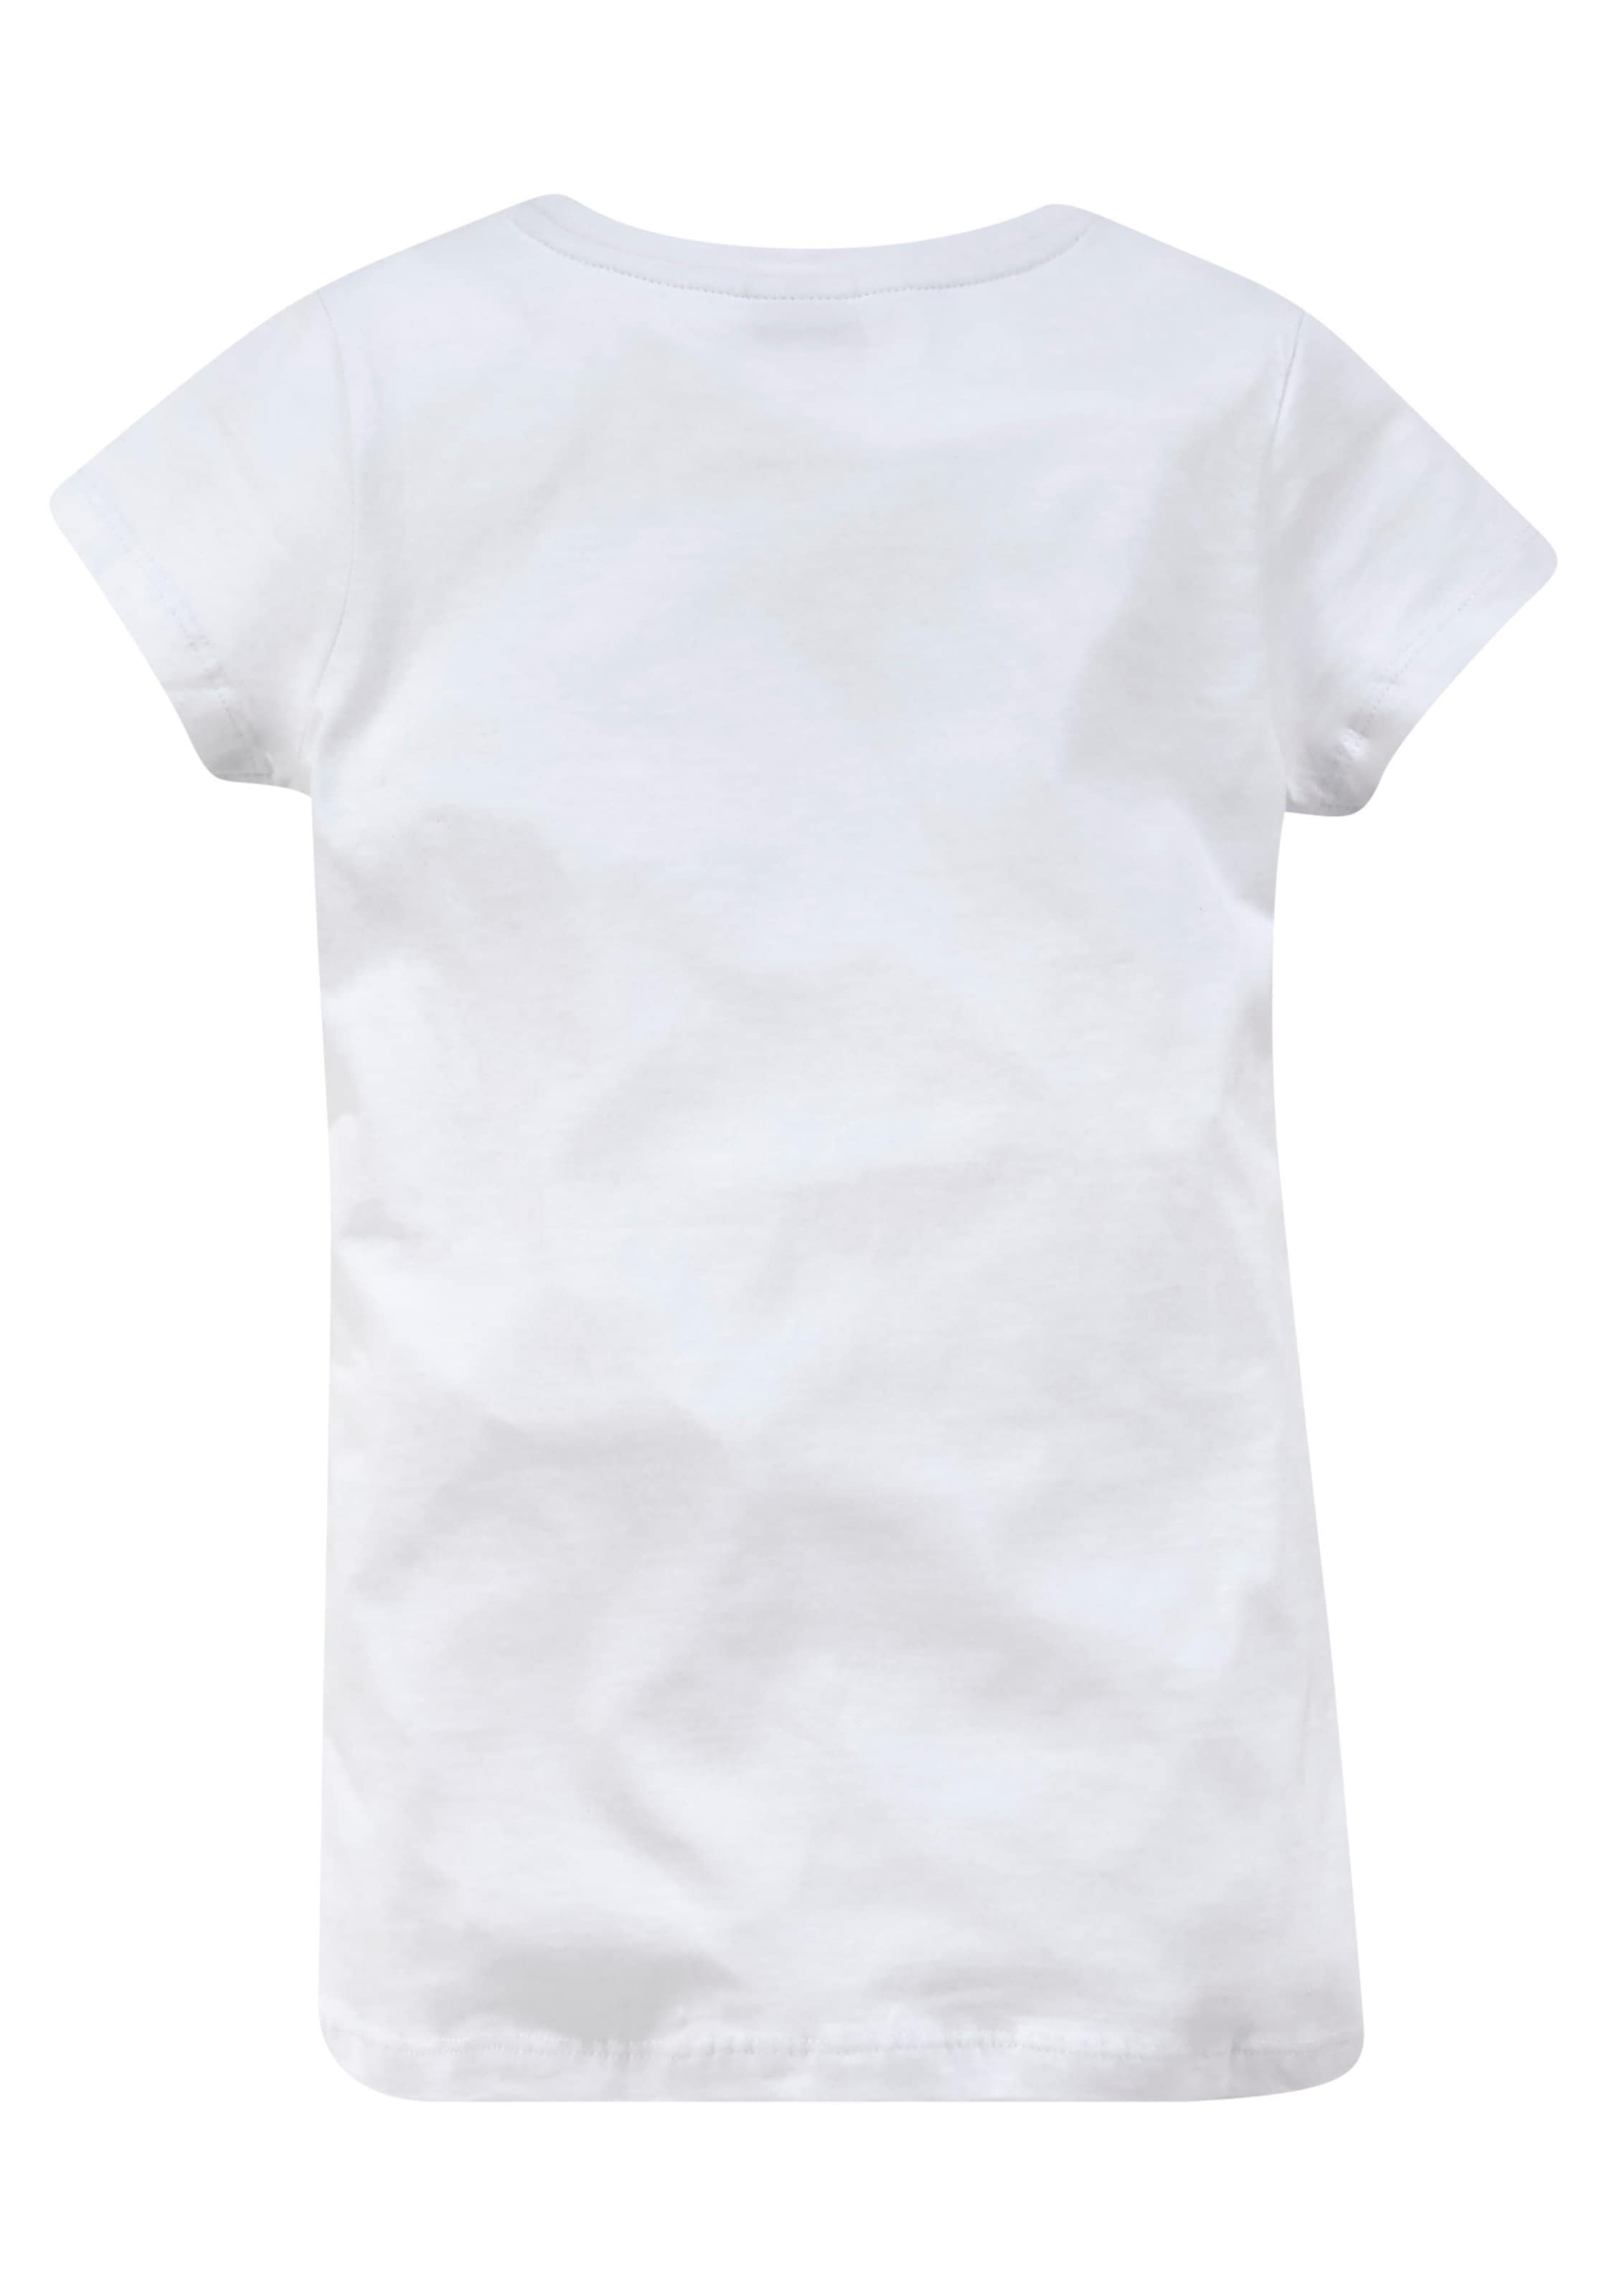 KangaROOS T-Shirt, mit Logodruck großem im %Sale jetzt